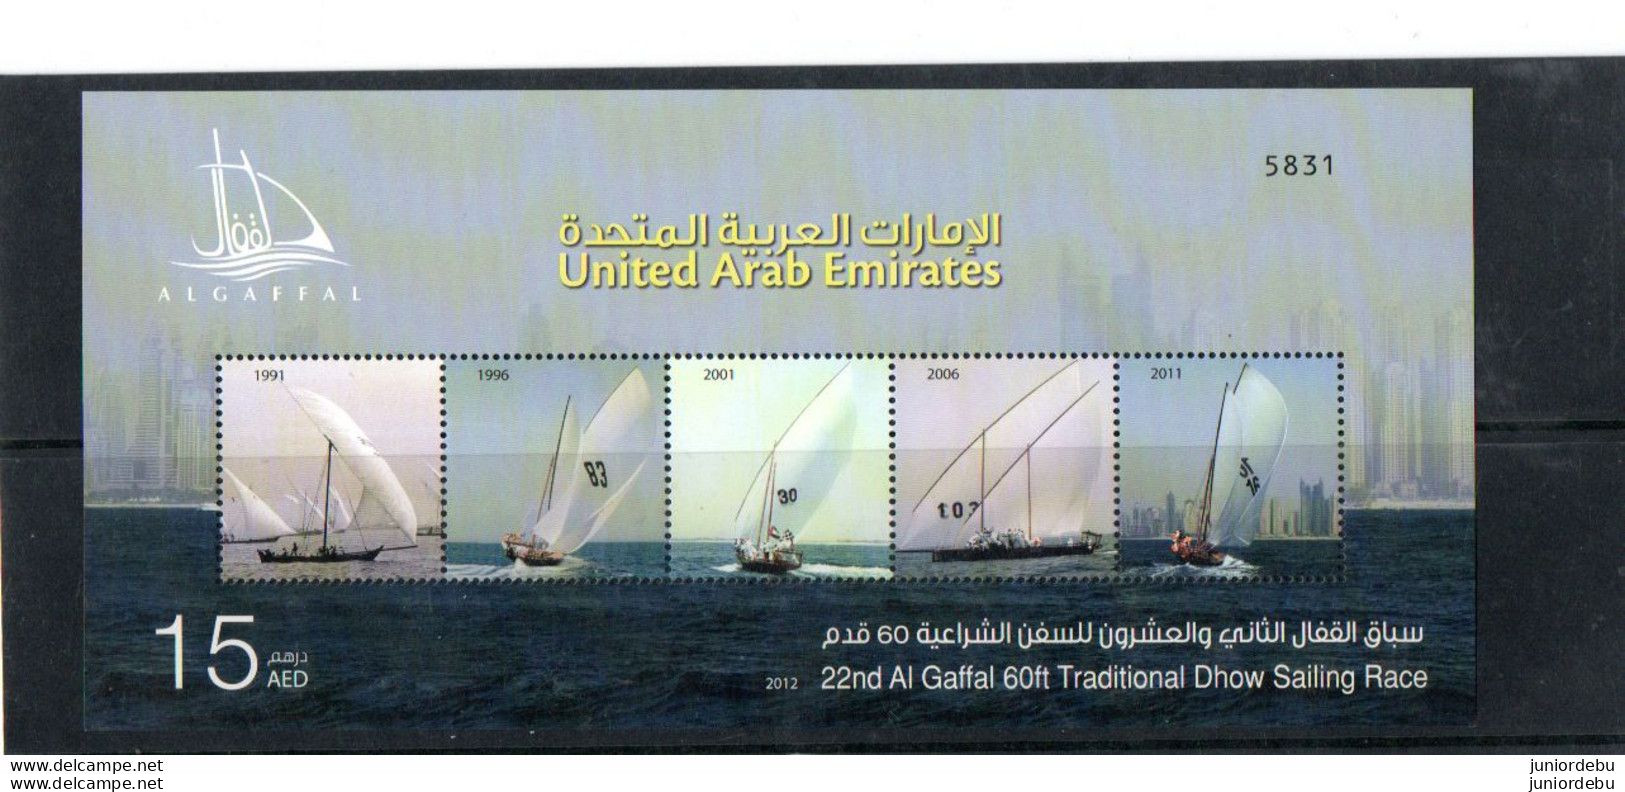 UAE - 2012 - The 22nd Al Gaffal Dhow Sailing Race - Miniature Sheet - MNH. ( OL 11/12/2022) - Verenigde Arabische Emiraten